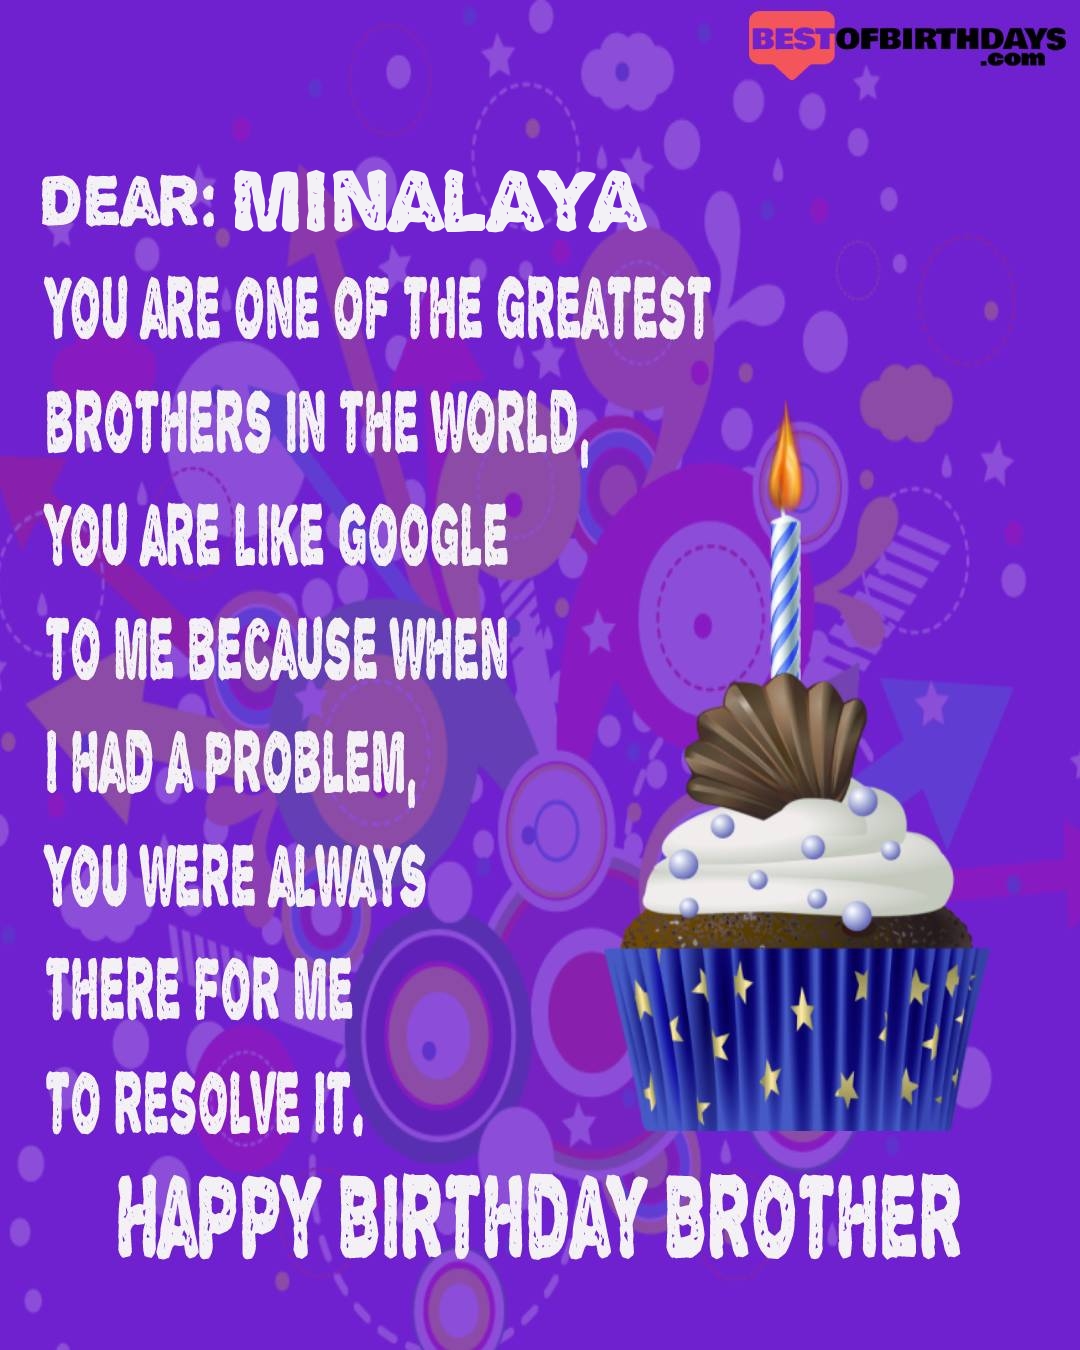 Happy birthday minalaya bhai brother bro